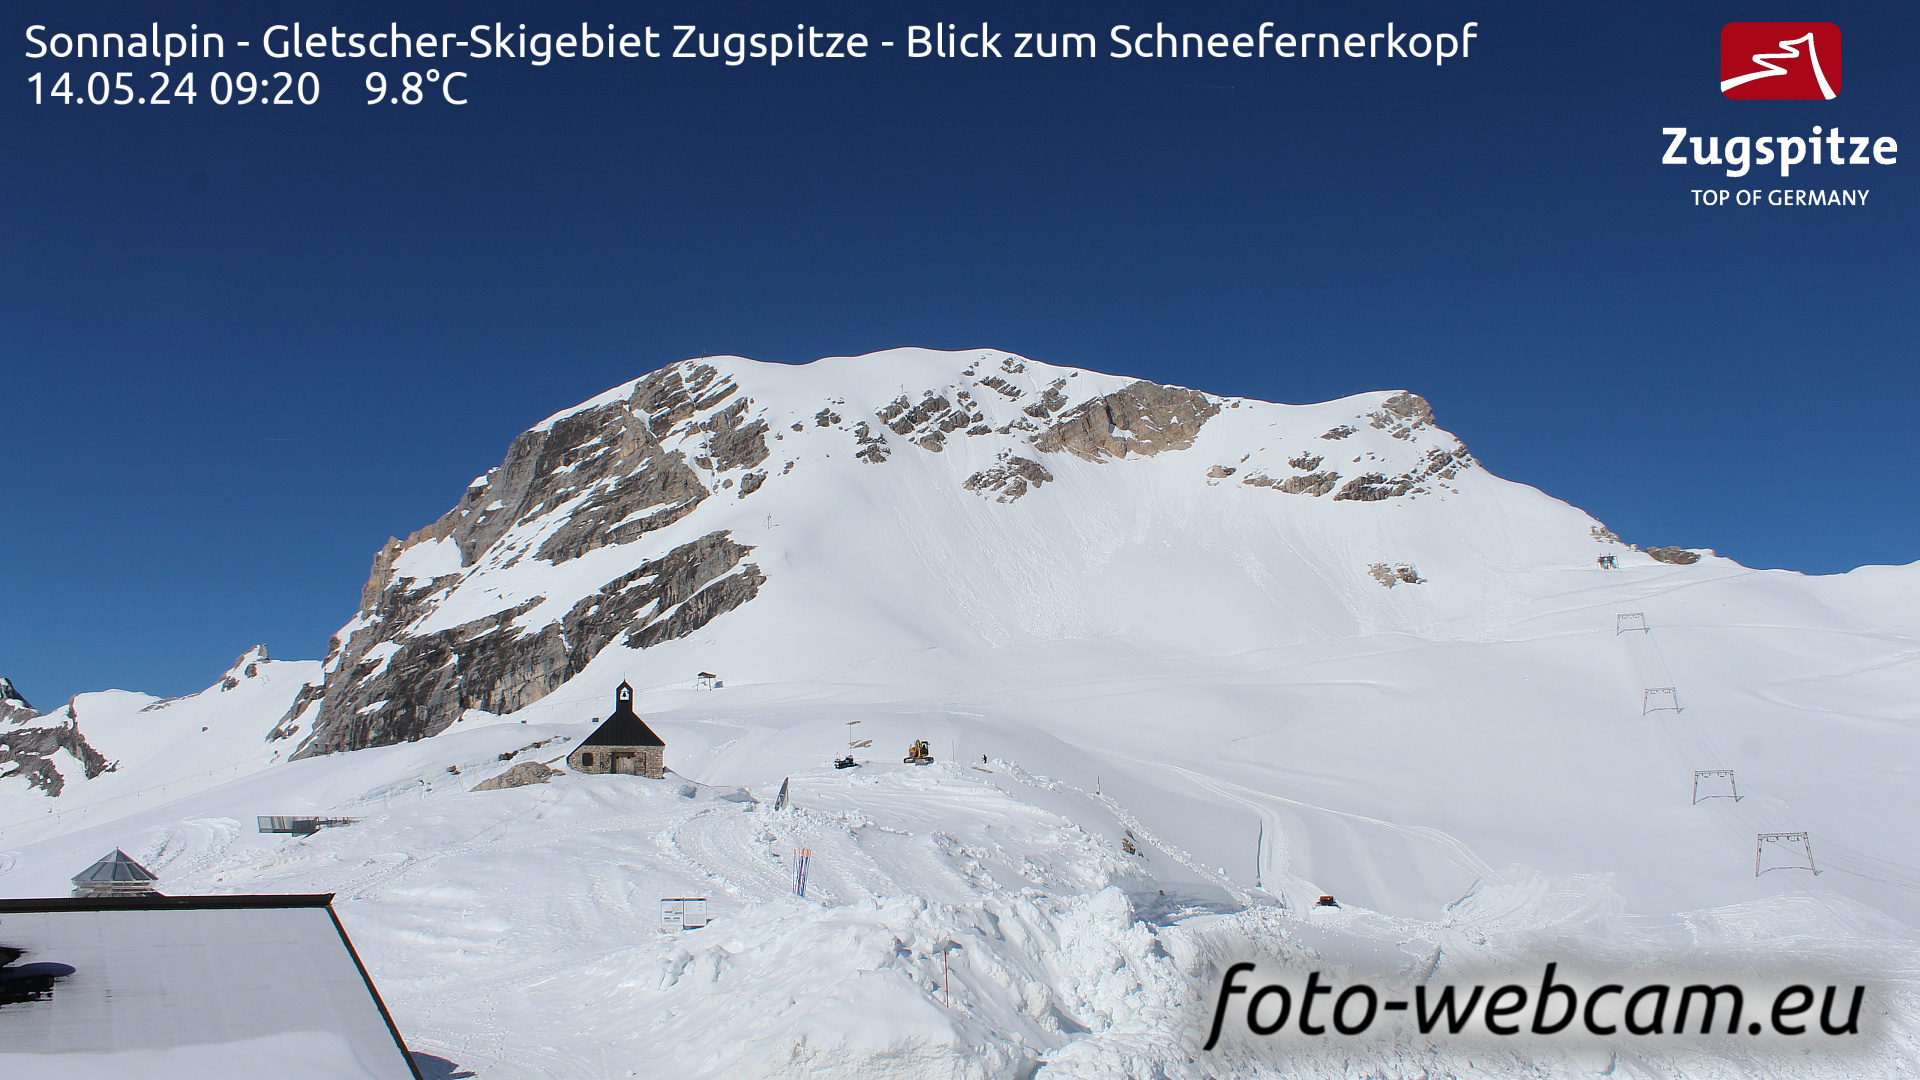 Zugspitze Mo. 09:24